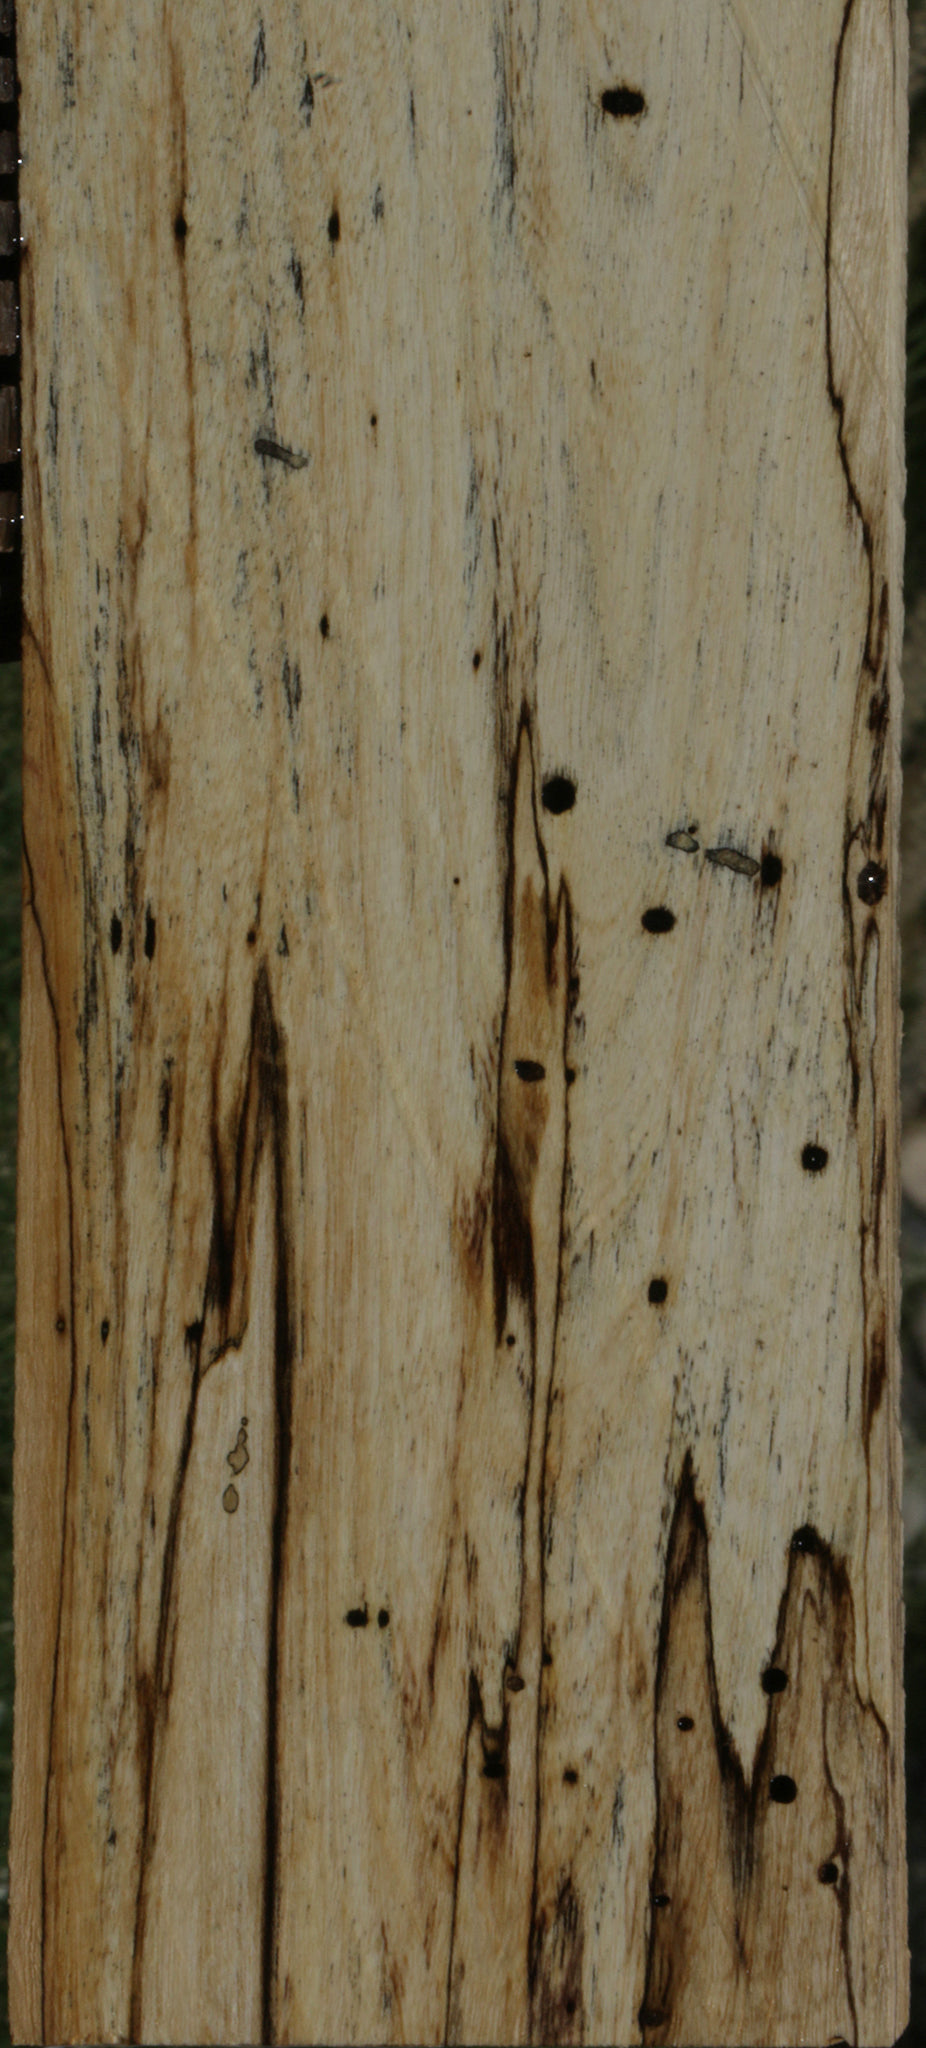 Spalted Hackberry Lumber